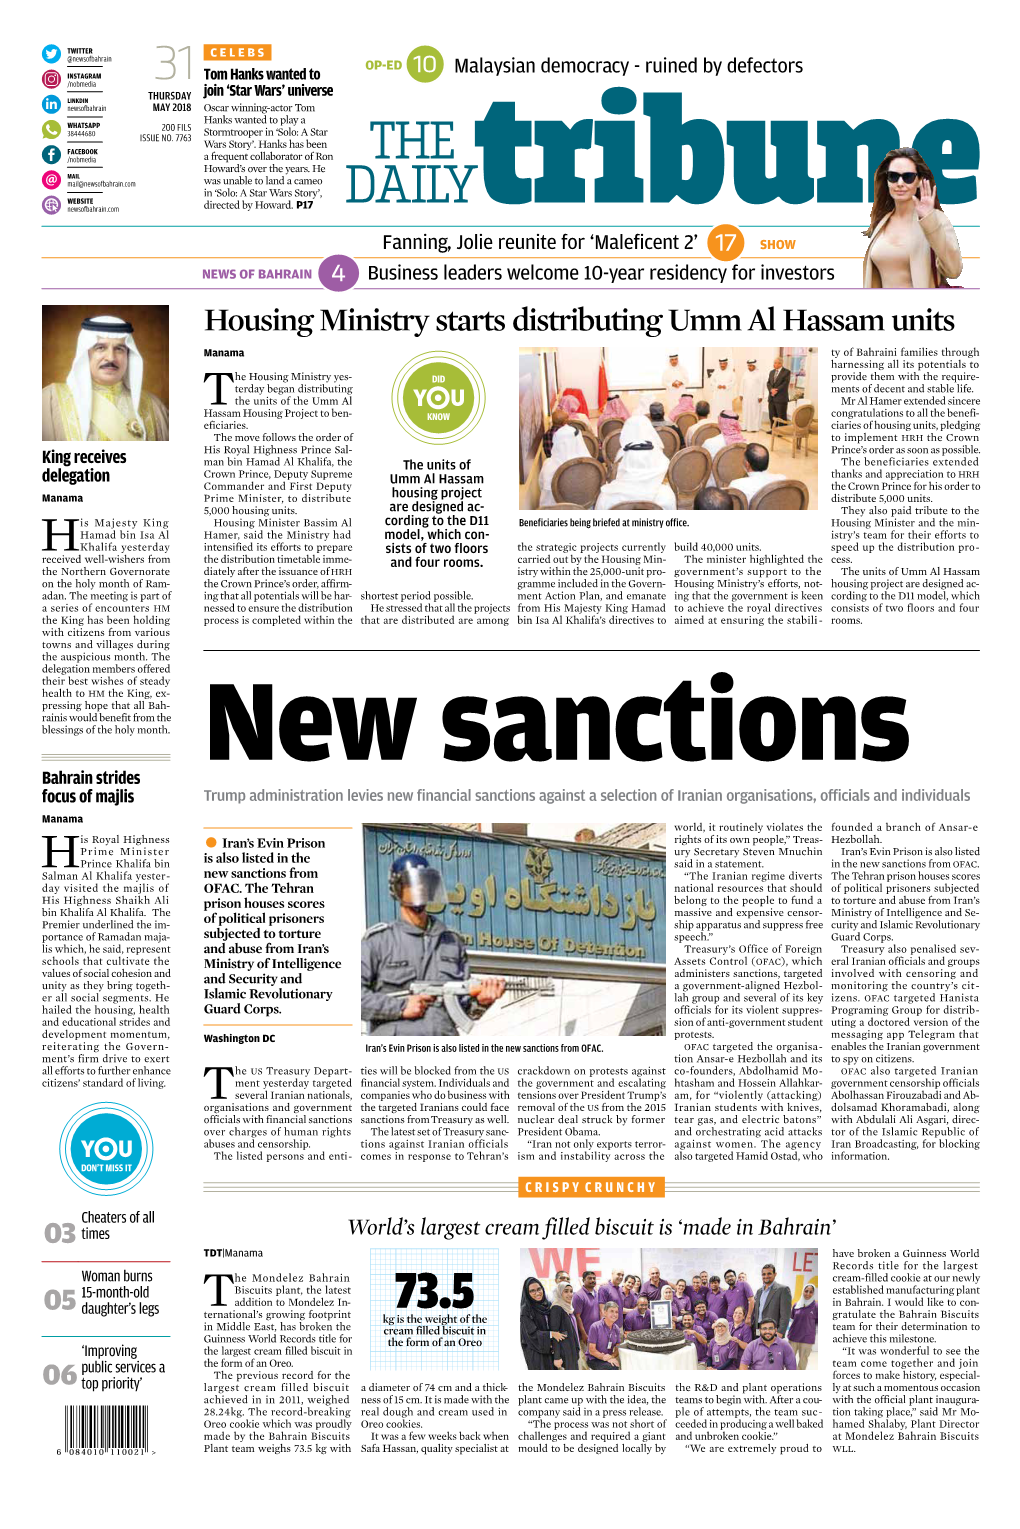 Housing Ministry Starts Distributing Umm Al Hassam Units